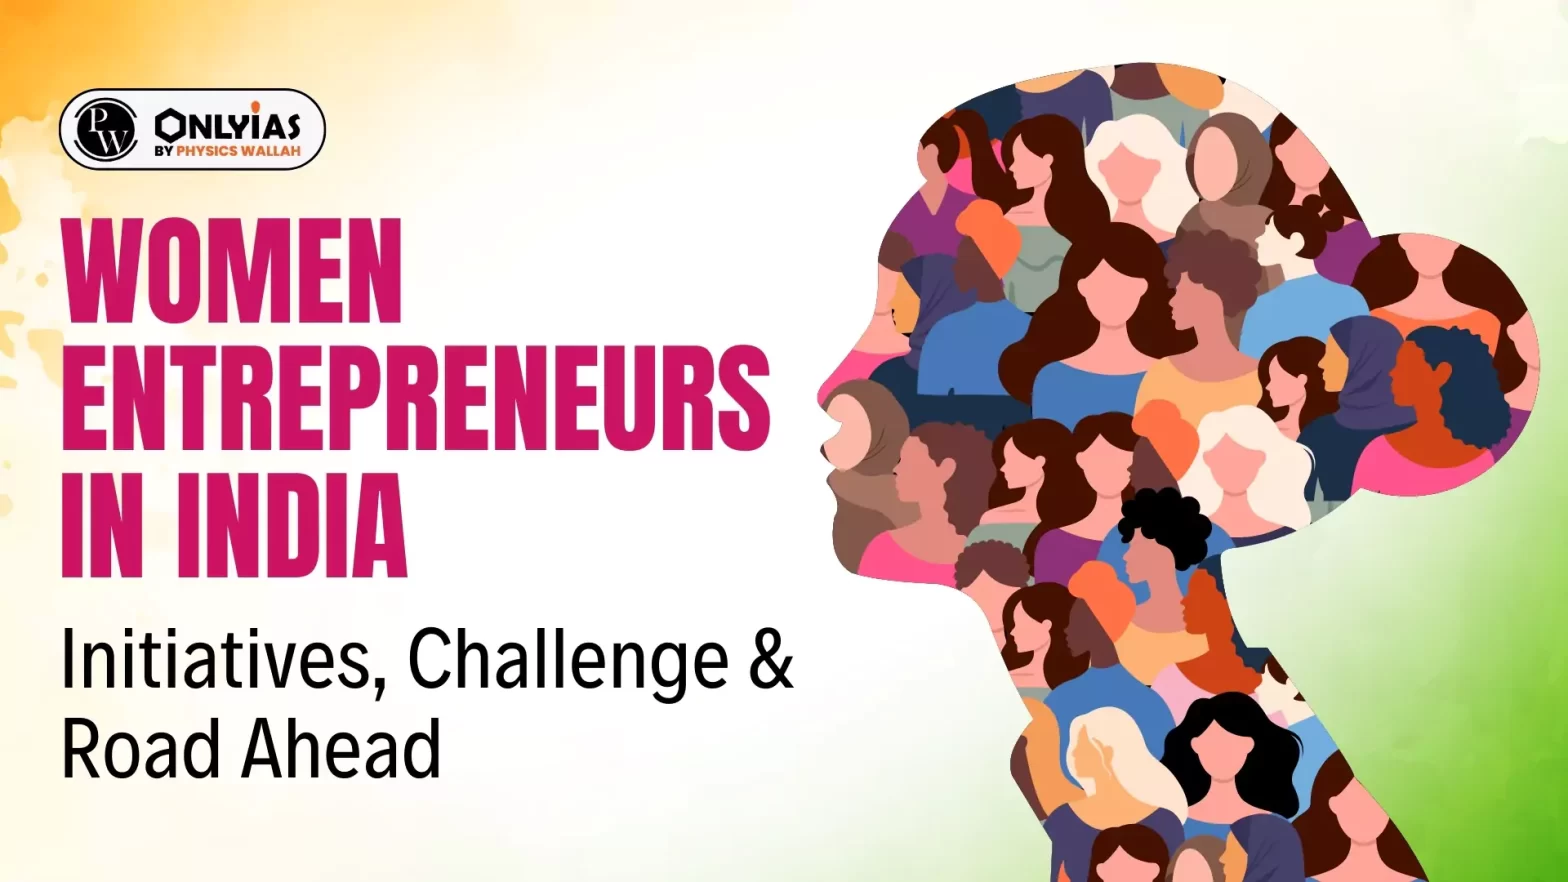 Women Entrepreneurs in India: Initiatives, Challenge & Road Ahead